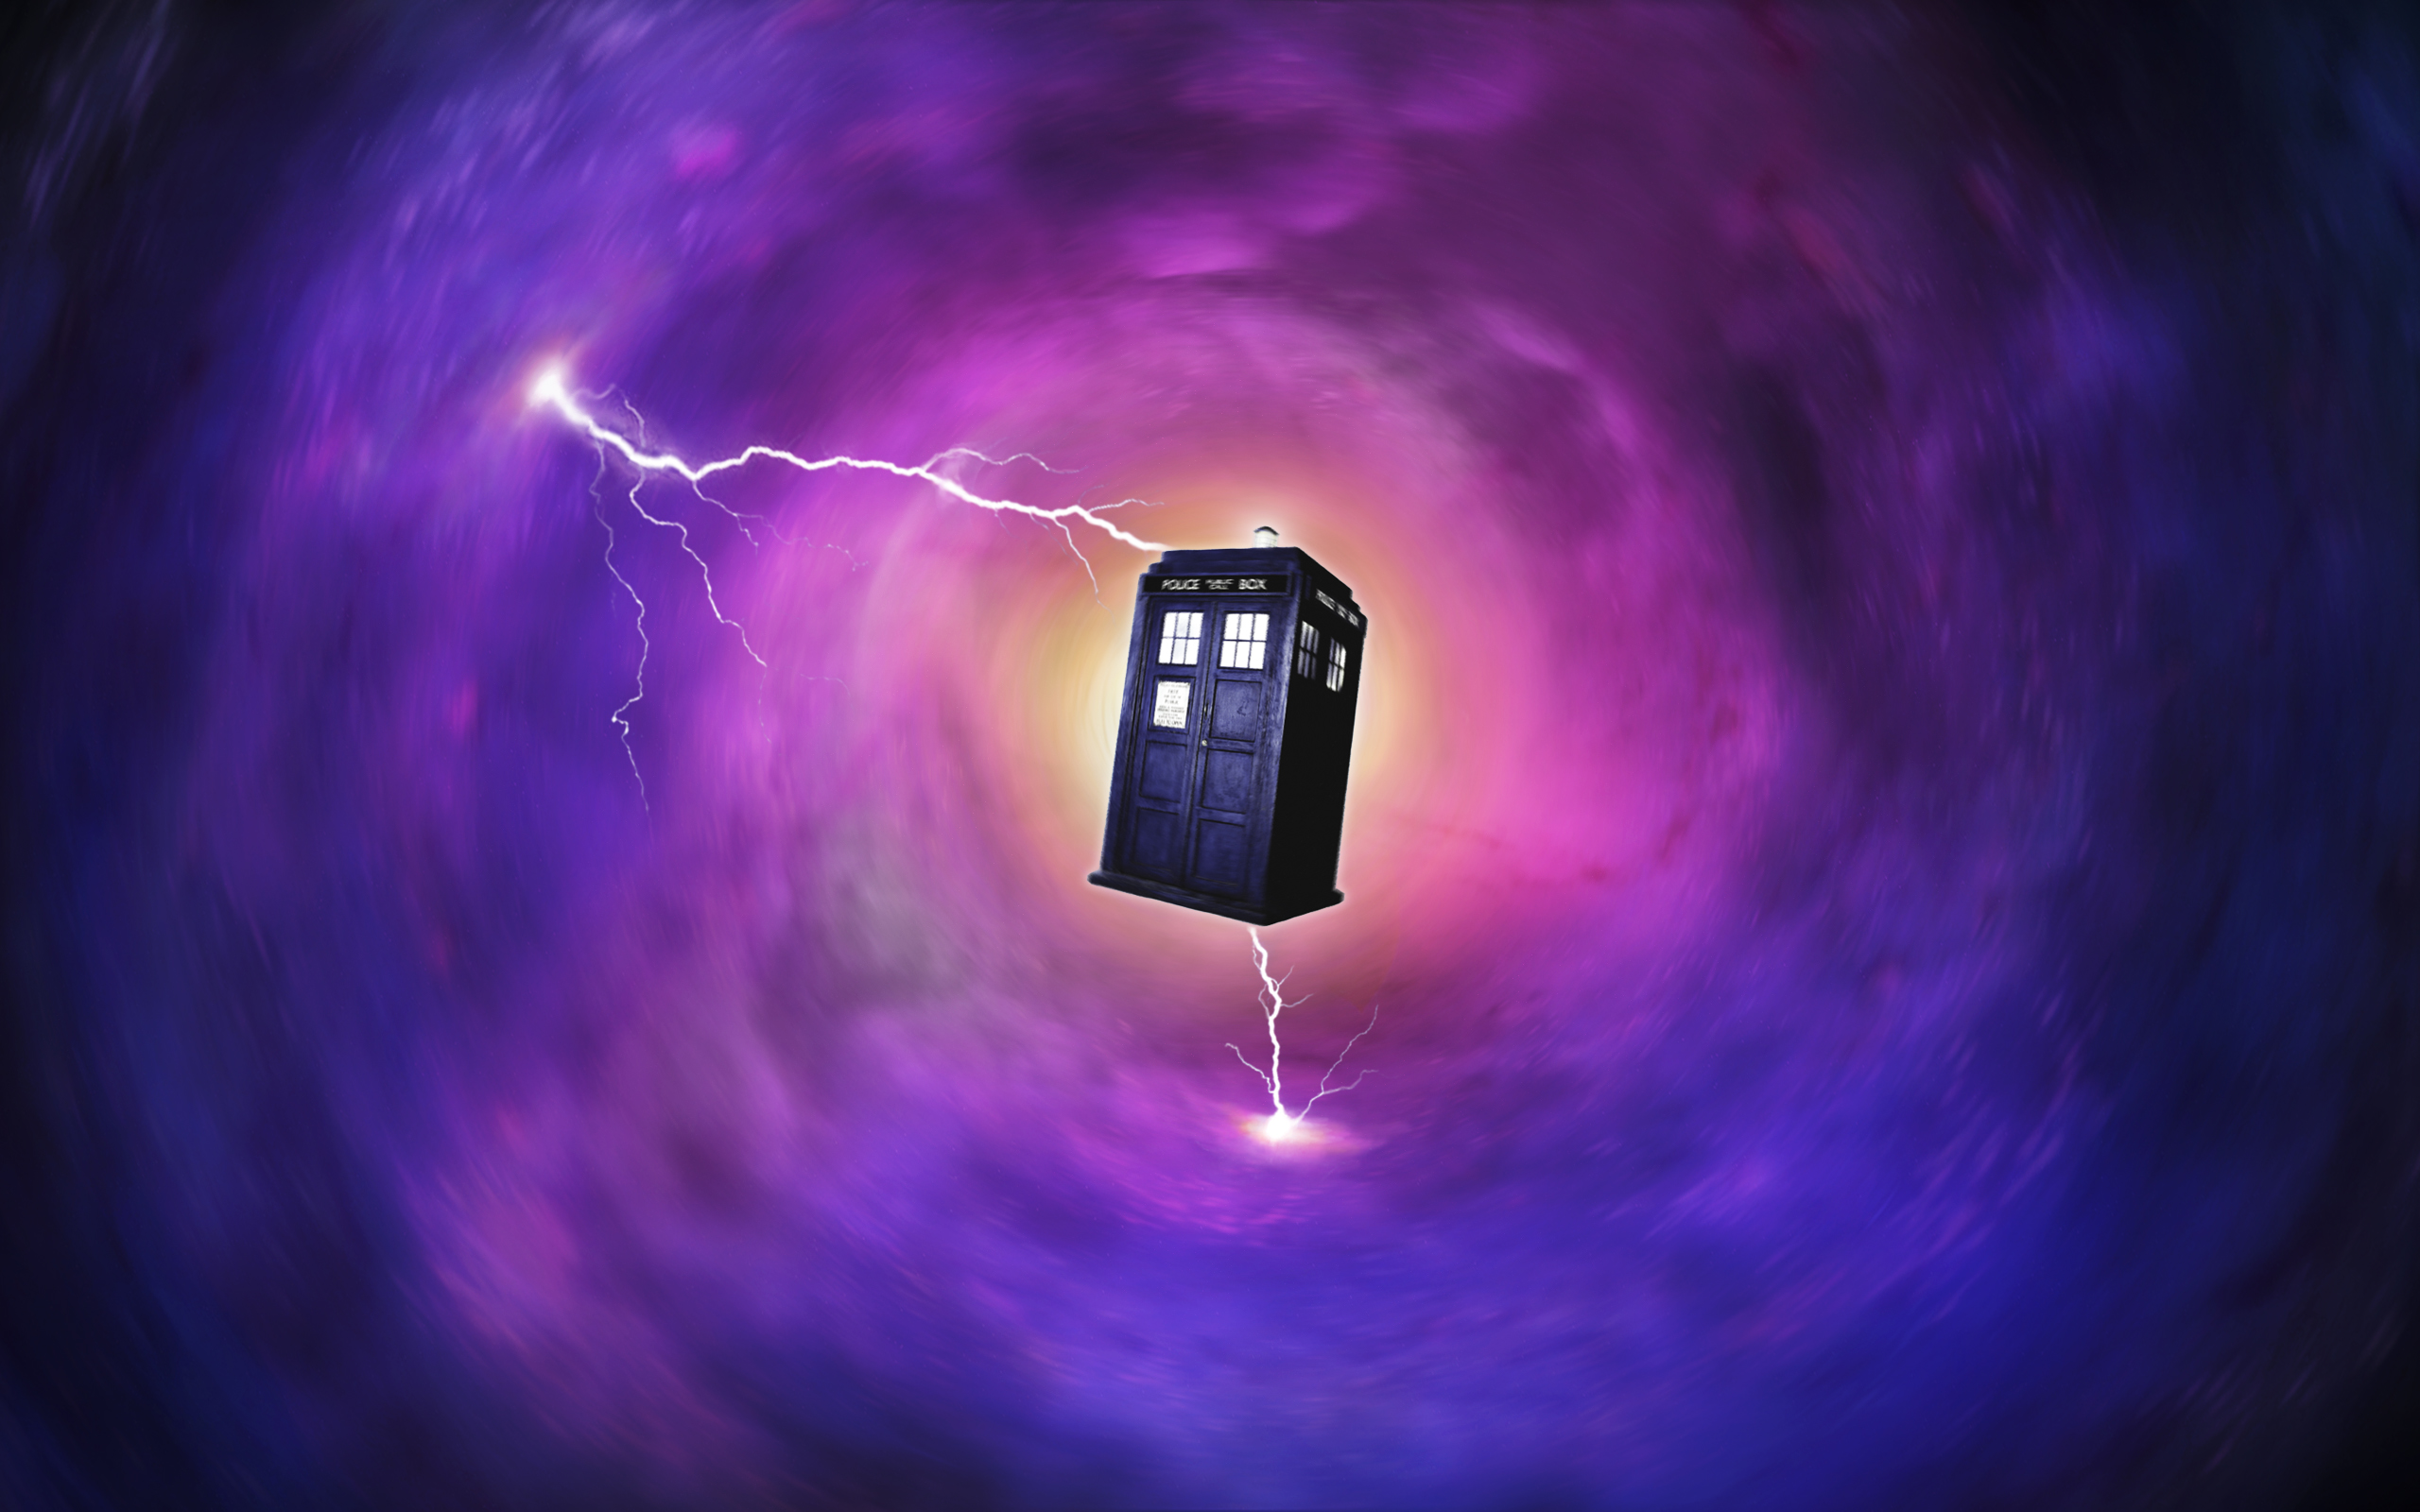 tardis, doctor who, tv show, lightning, telephone booth